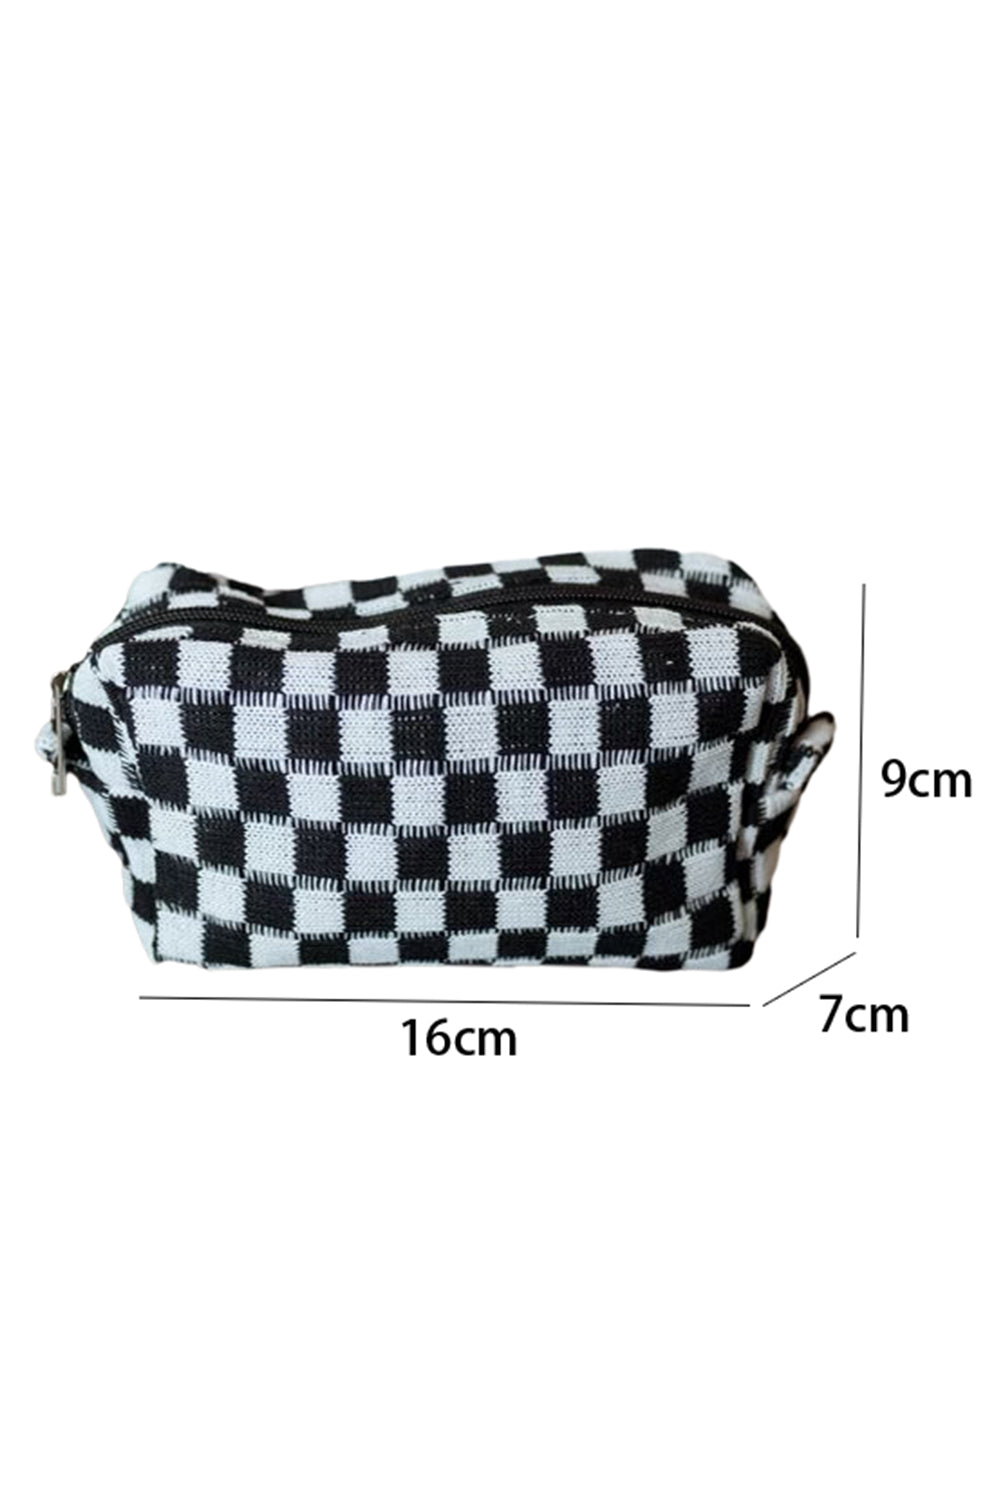 Black Checkered zipper Makeup Bag